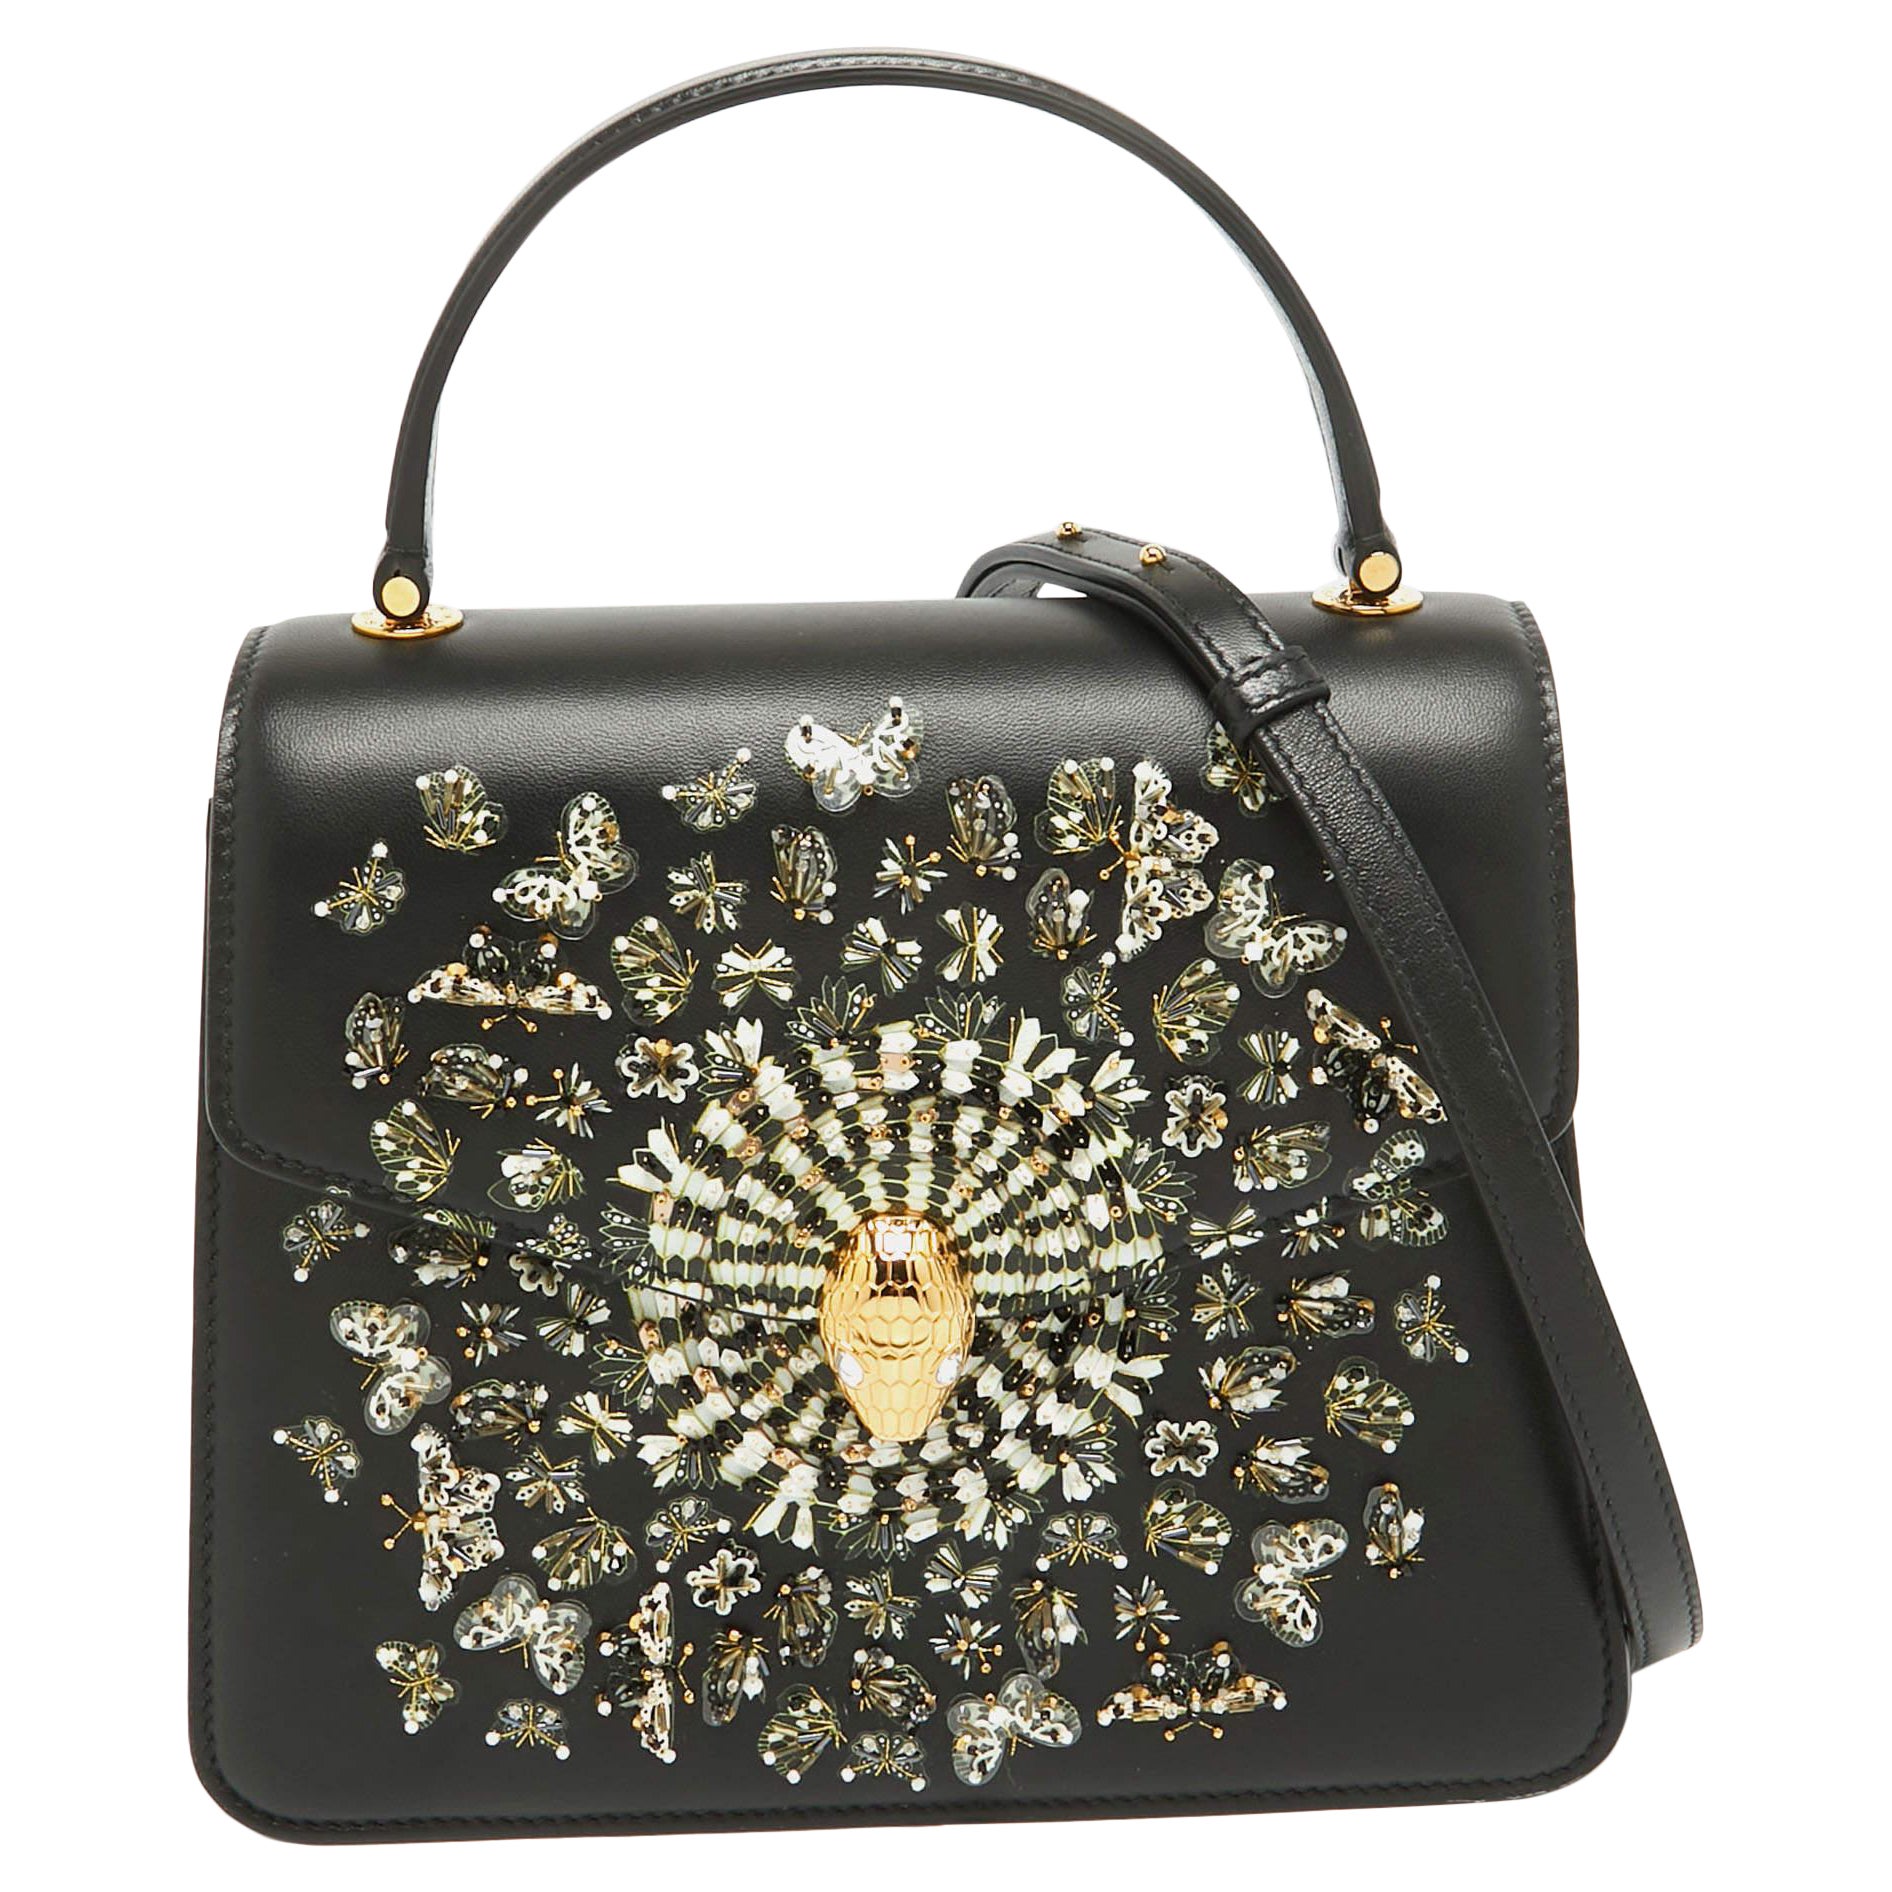 Bvlgari x Mary Katrantzou Black Leather Bejewelled Top Handle Bag For Sale